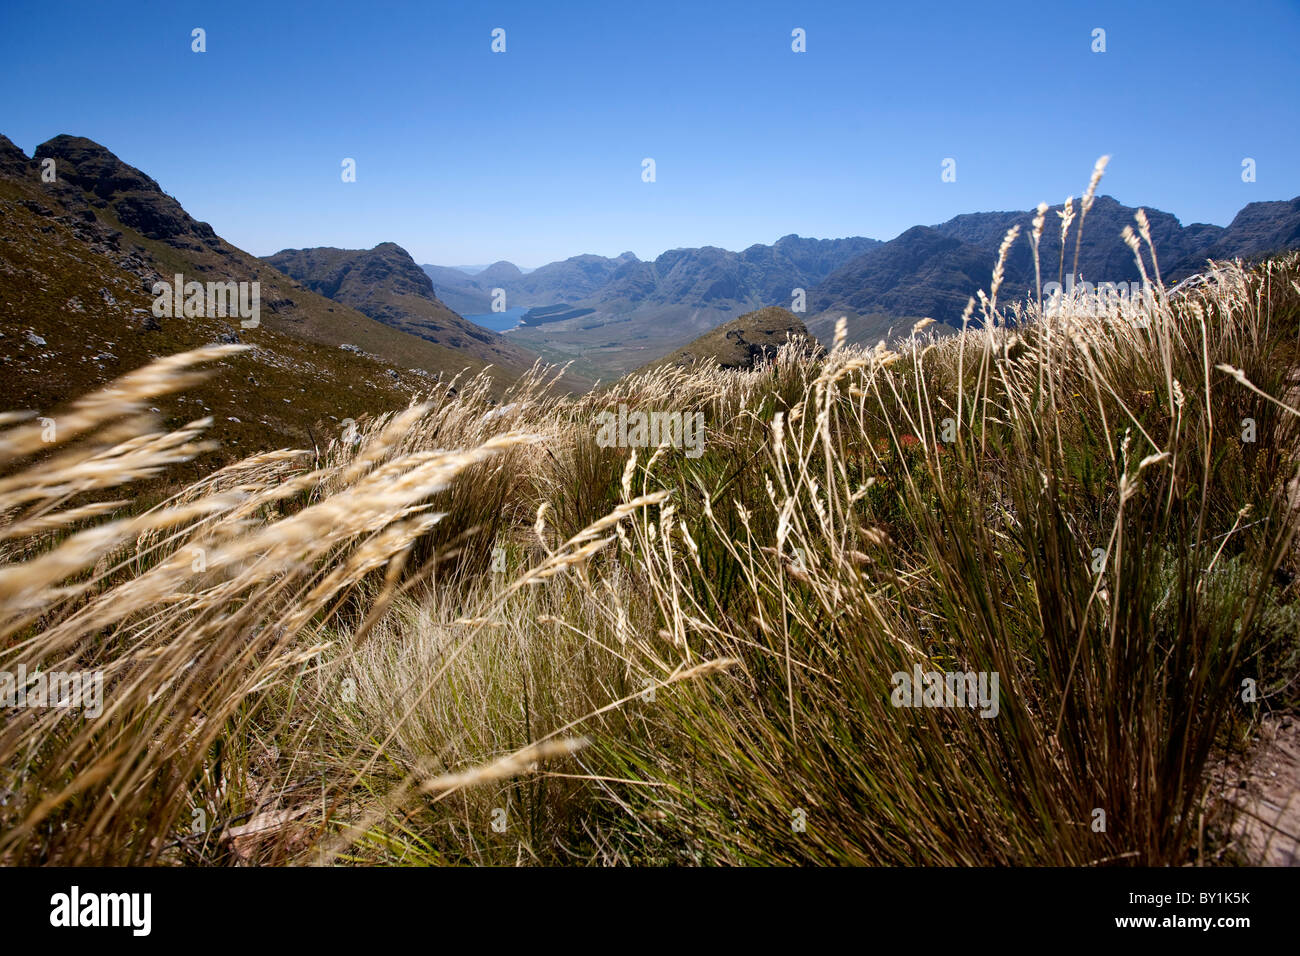 Sud Africa, Franschhoek. Una vista attraverso le erbe lunghe del Fynbos di Mont Rochelle riserva naturale vicino a Franschhoek. Foto Stock